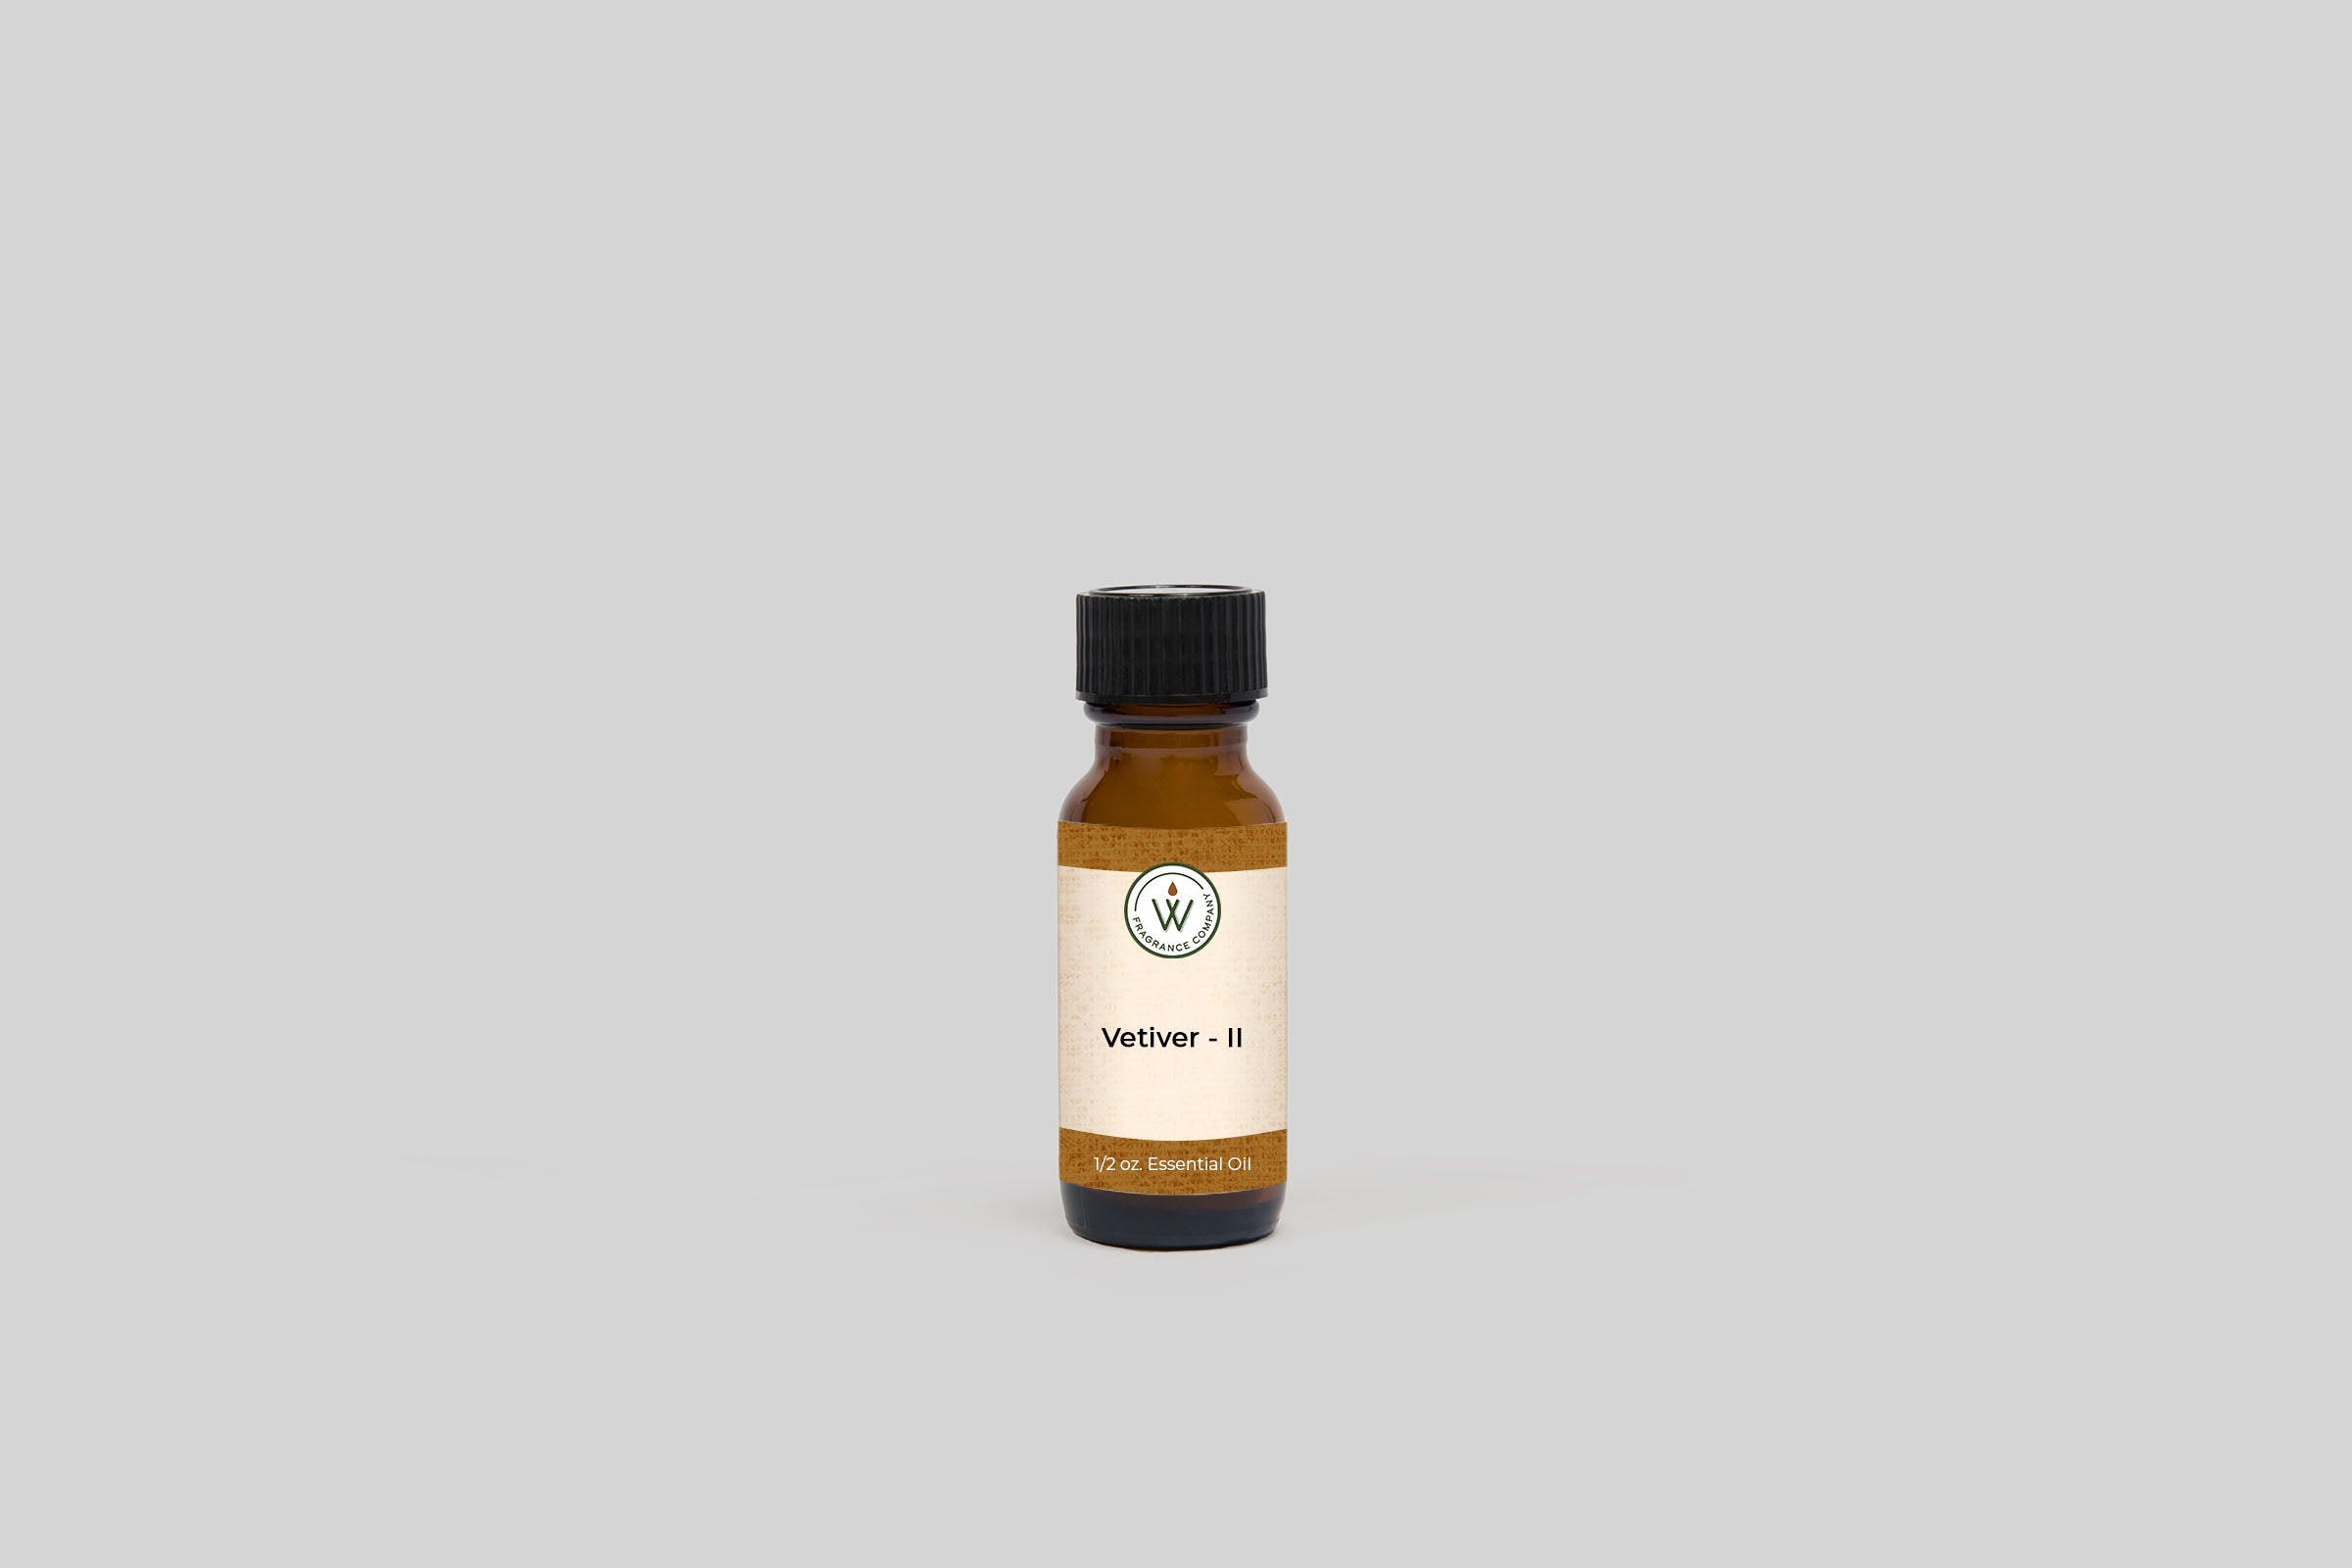 Vetiver - II Essential Oil